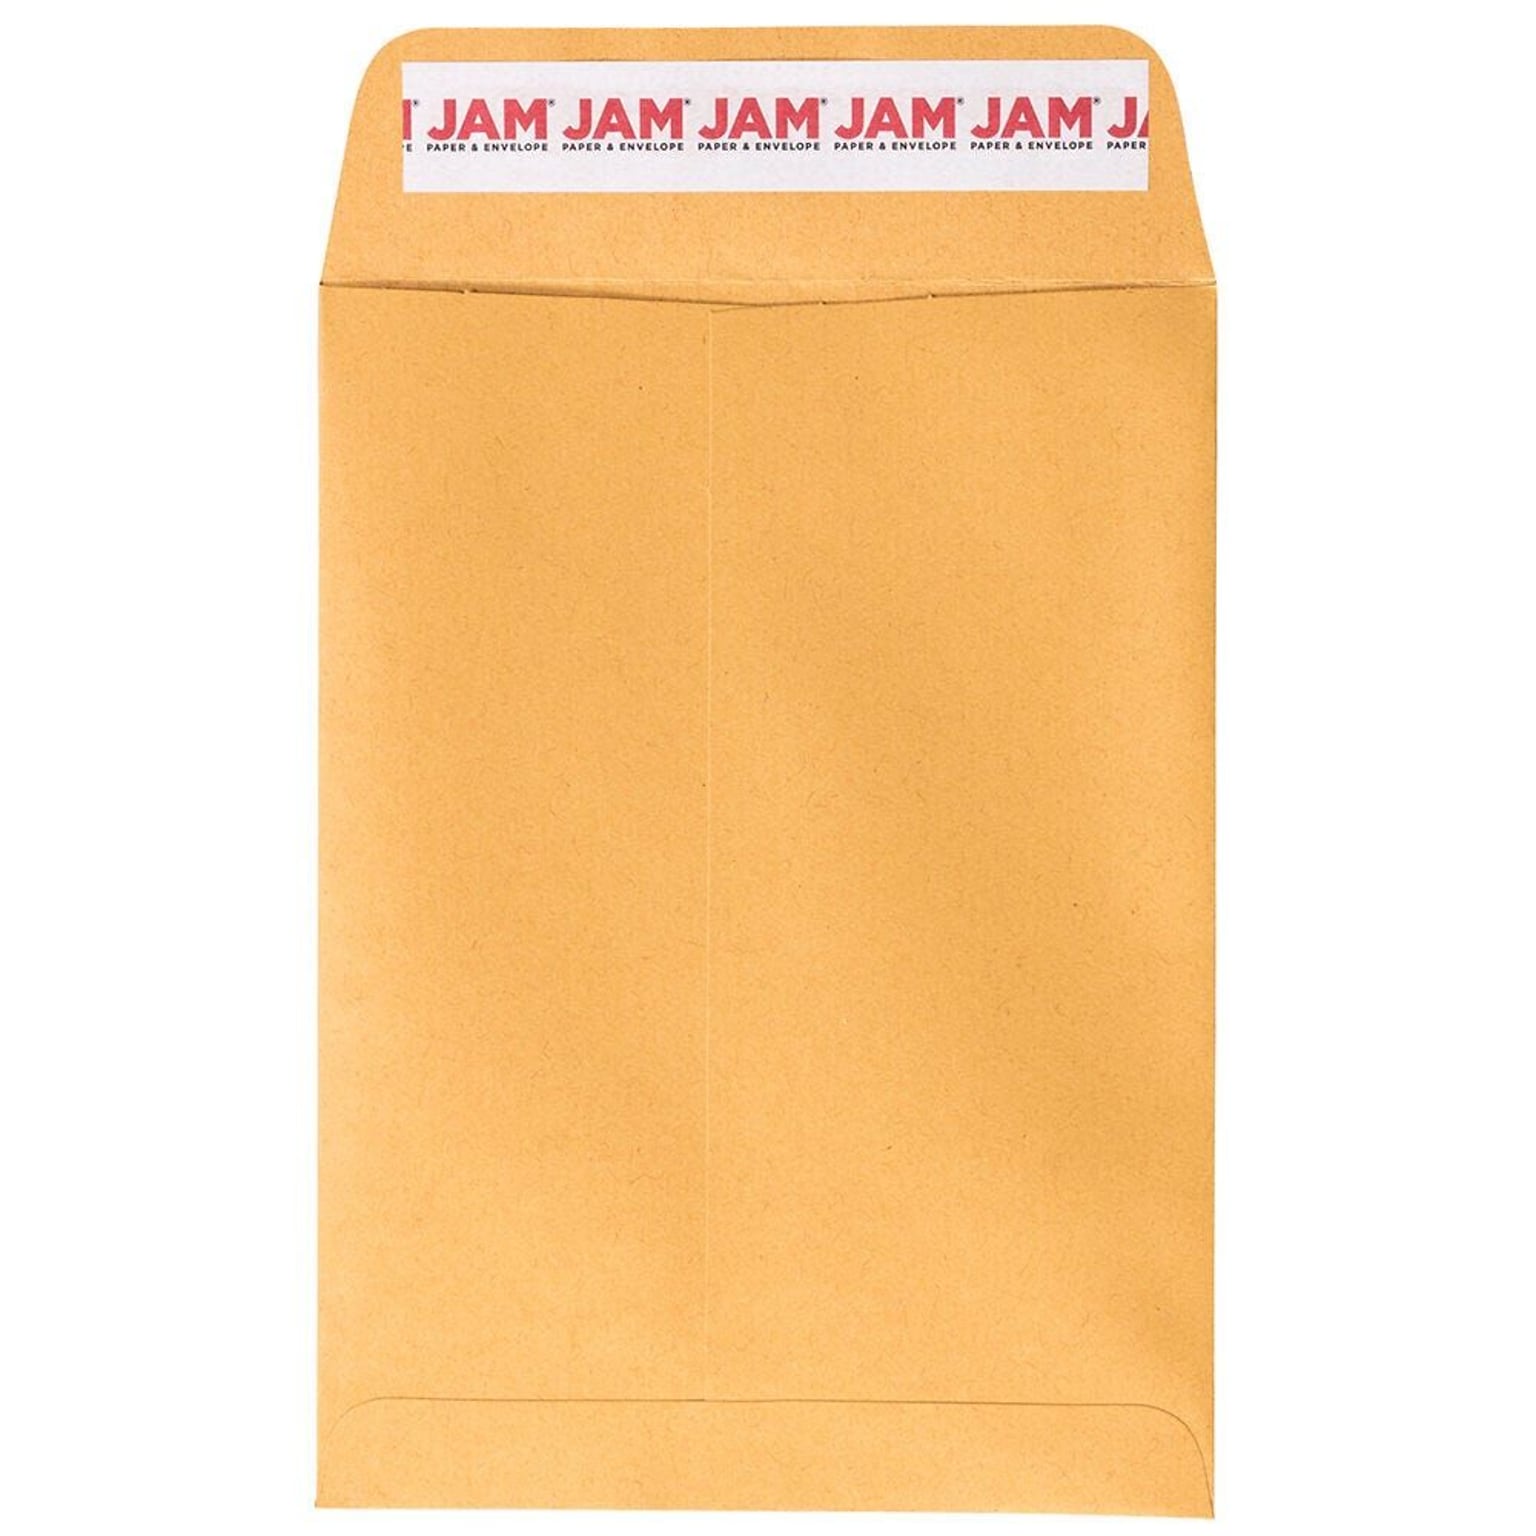 JAM PAPER Self Seal Catalog Envelopes, 5 1/2 x 7 1/2, Brown Kraft Manila, 100/Pack (400238465D)